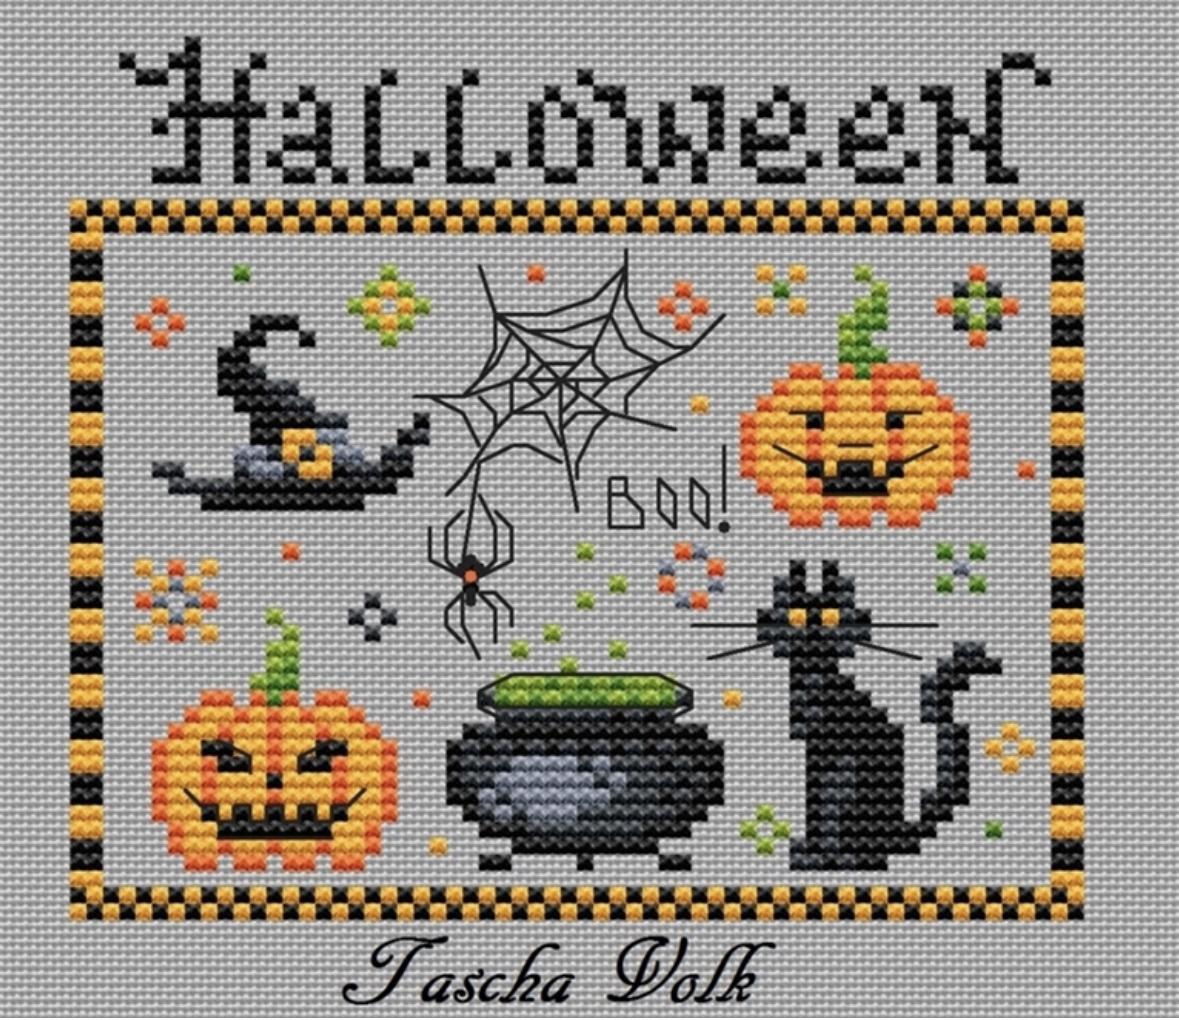 Halloween Primitive - Free Cross Stitch Pattern for Beginners